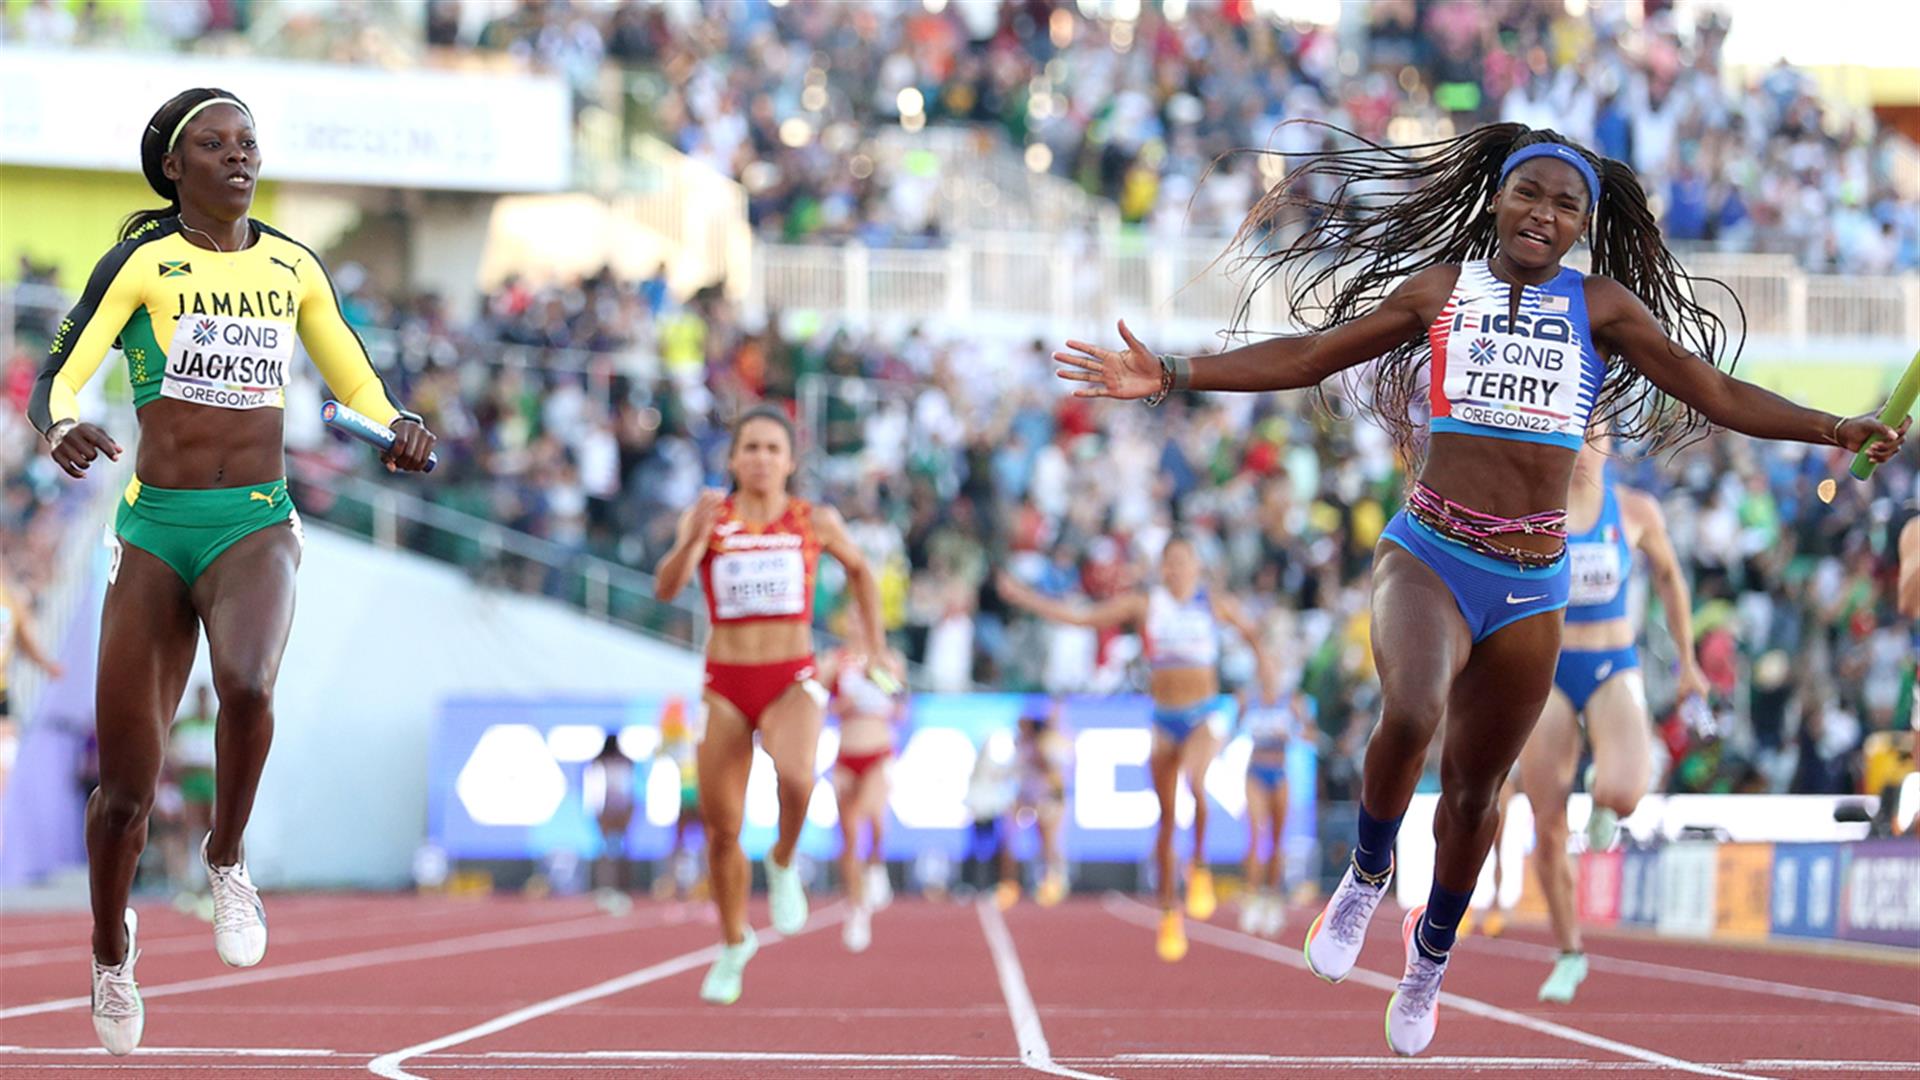 On Track to Paris: Team Jamaica vs. Team USA in Women’s Sprints